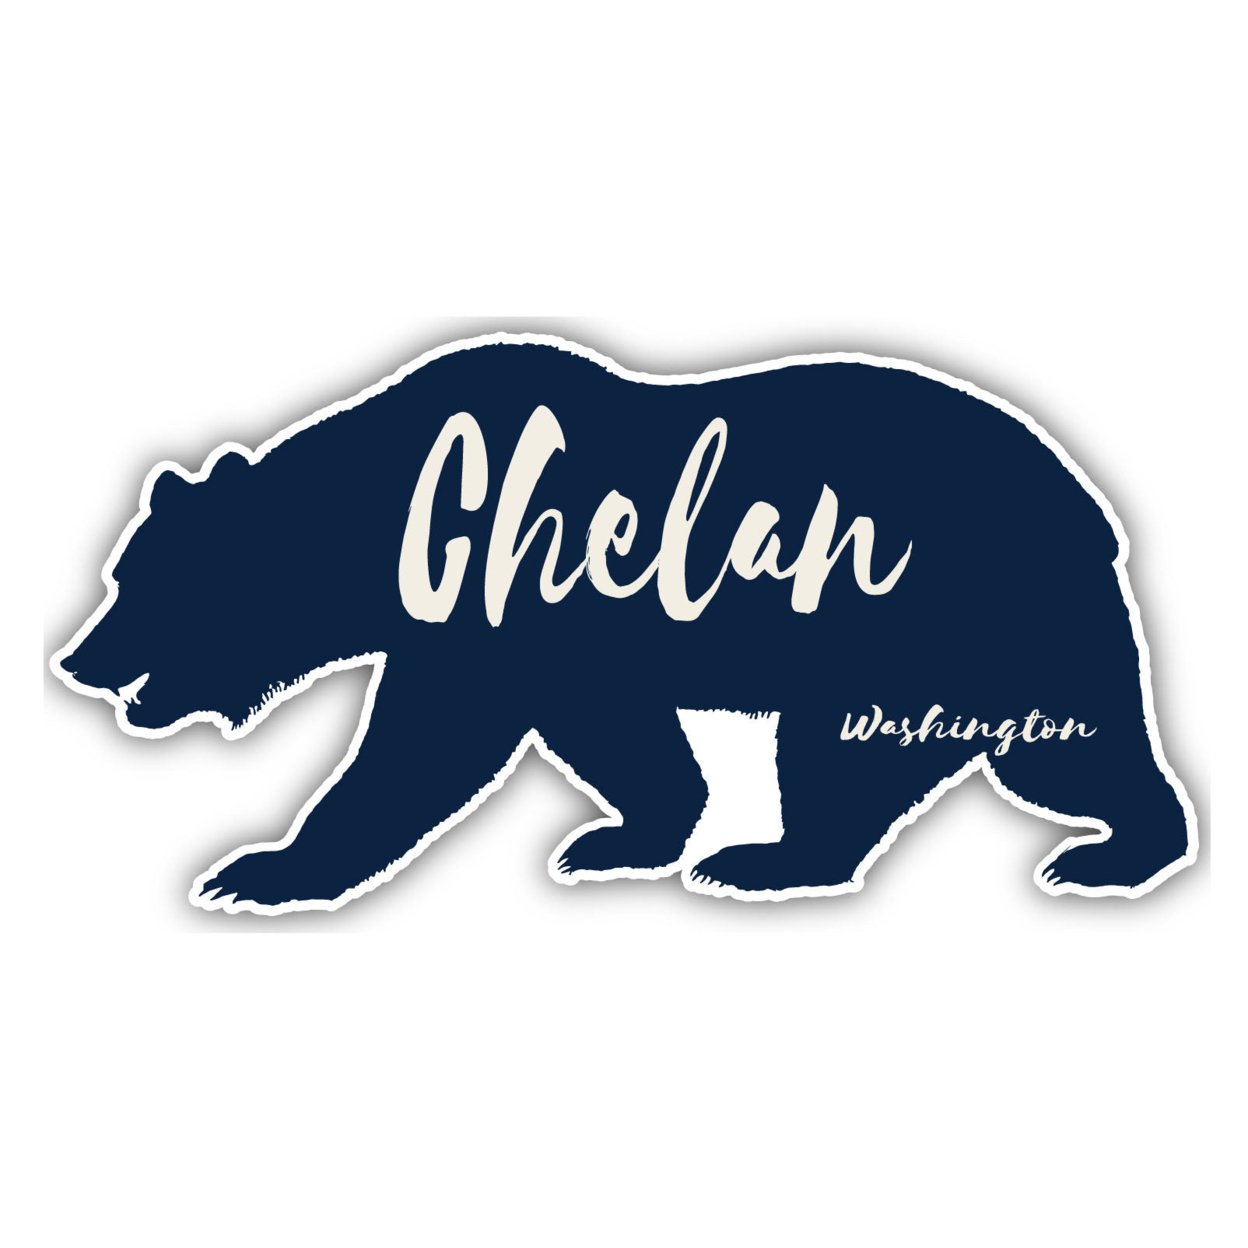 Chelan Washington Souvenir Decorative Stickers (Choose Theme And Size) - Single Unit, 8-Inch, Tent